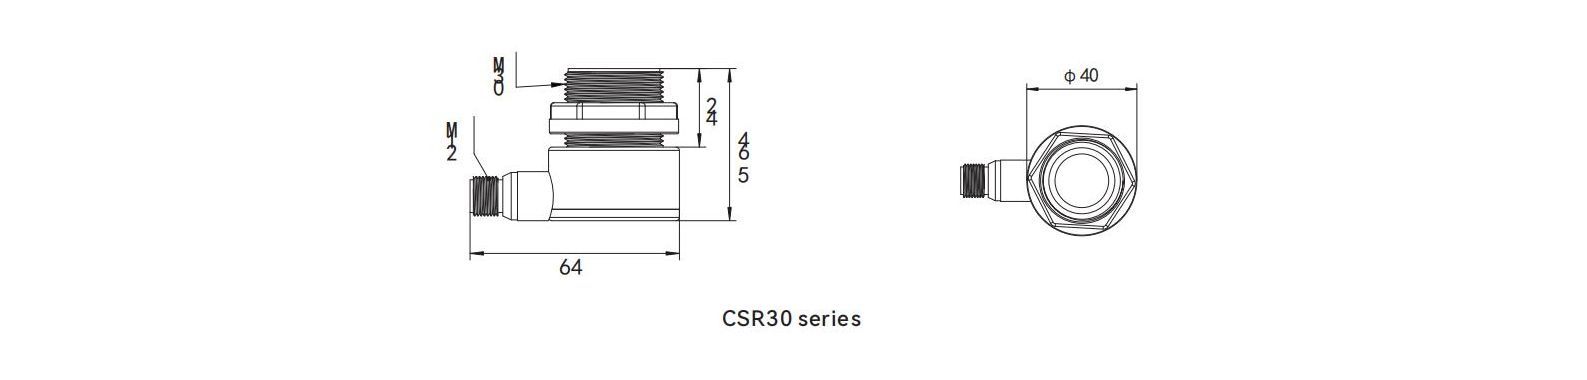 Dimensions of probe ultrasonic CSR30 series